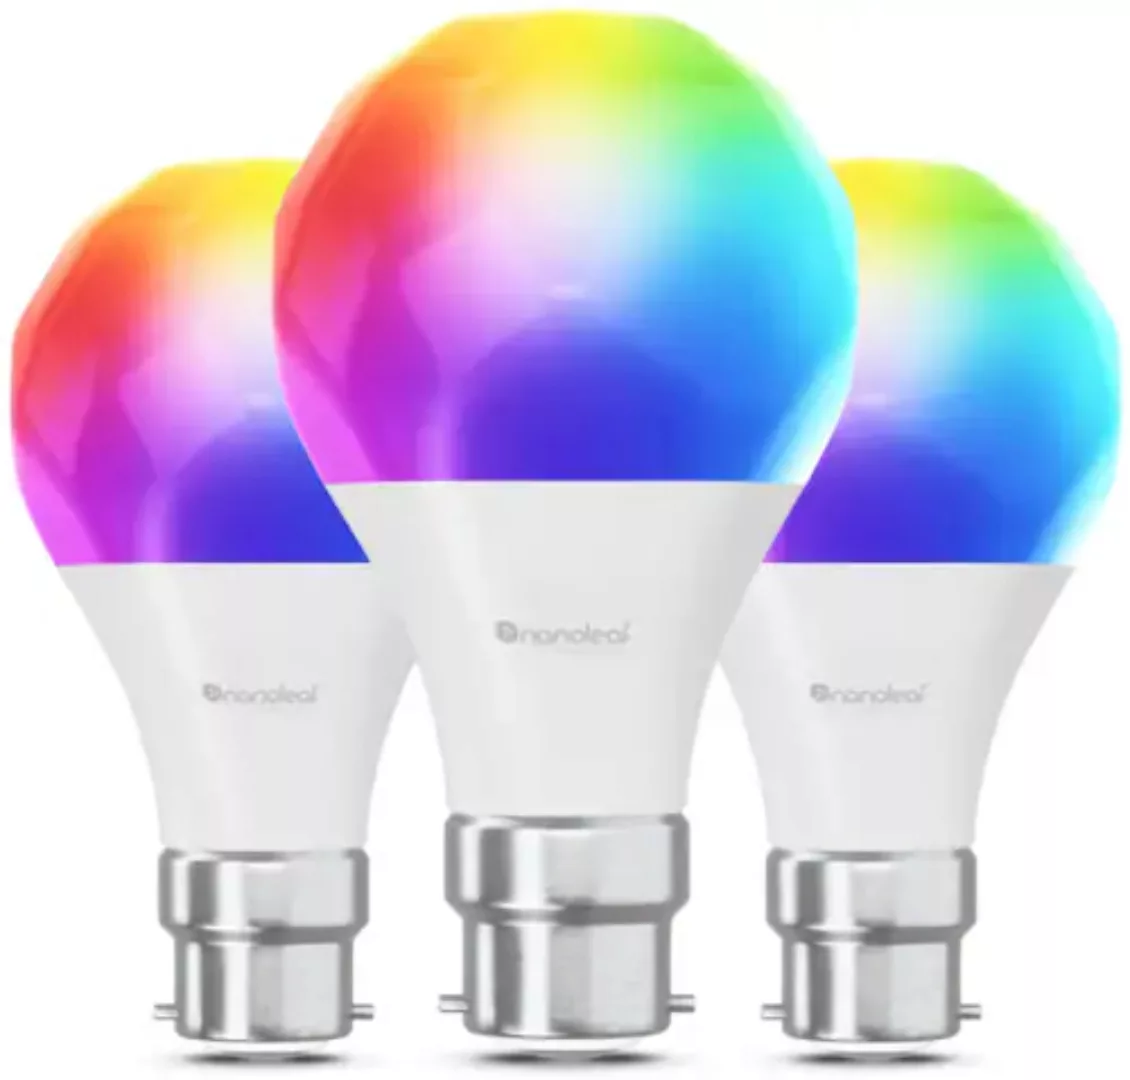 nanoleaf LED-Leuchtmittel günstig online kaufen